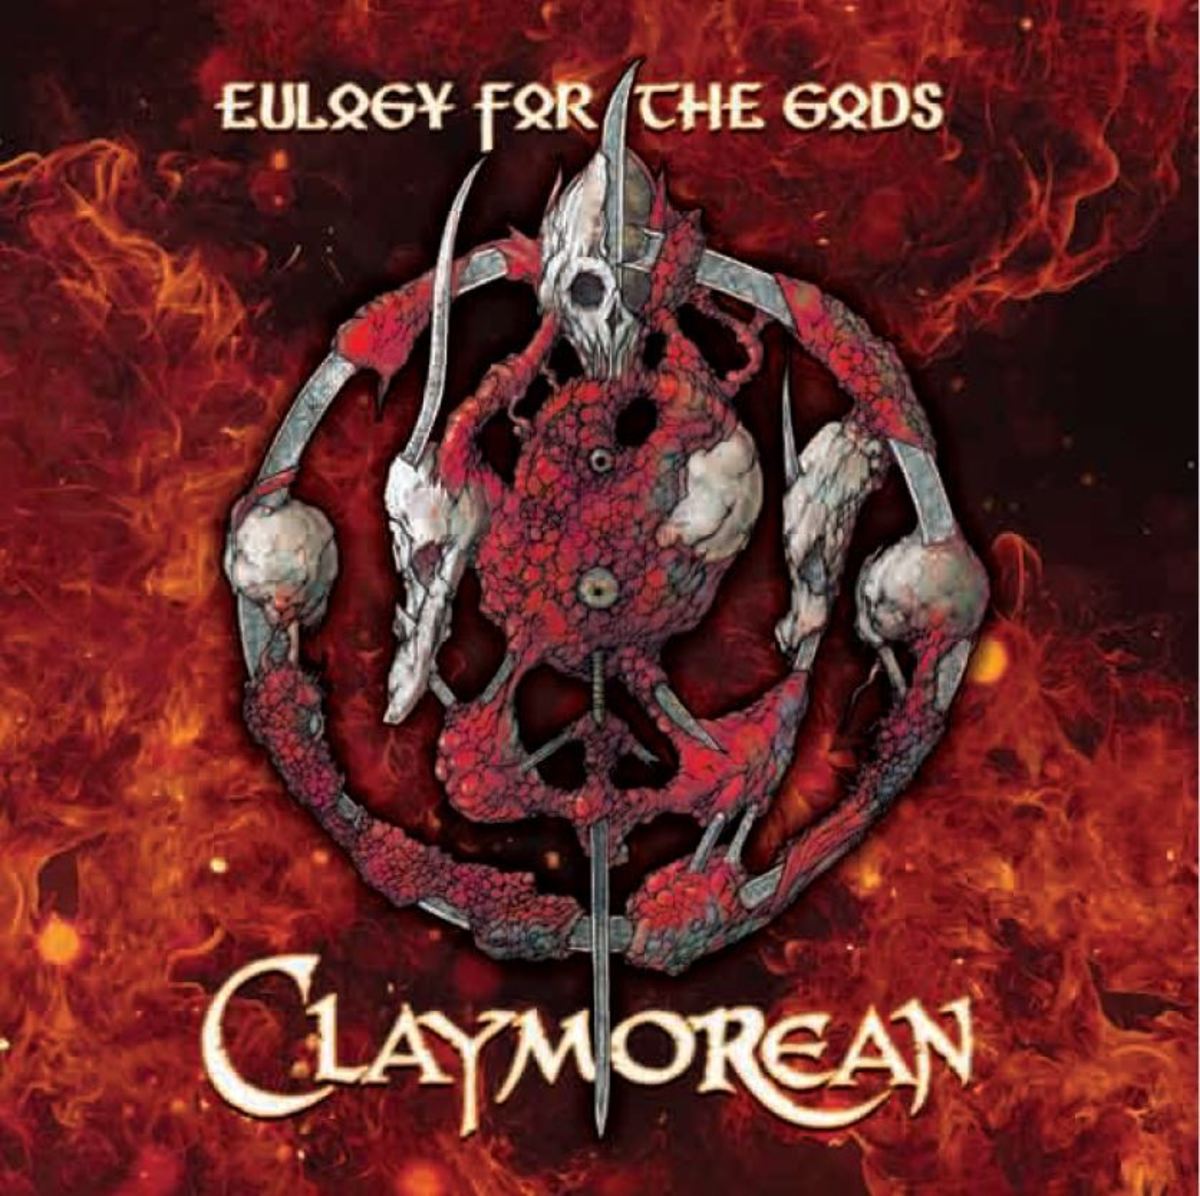 claymorean-eulogy-for-the-gods-album-review